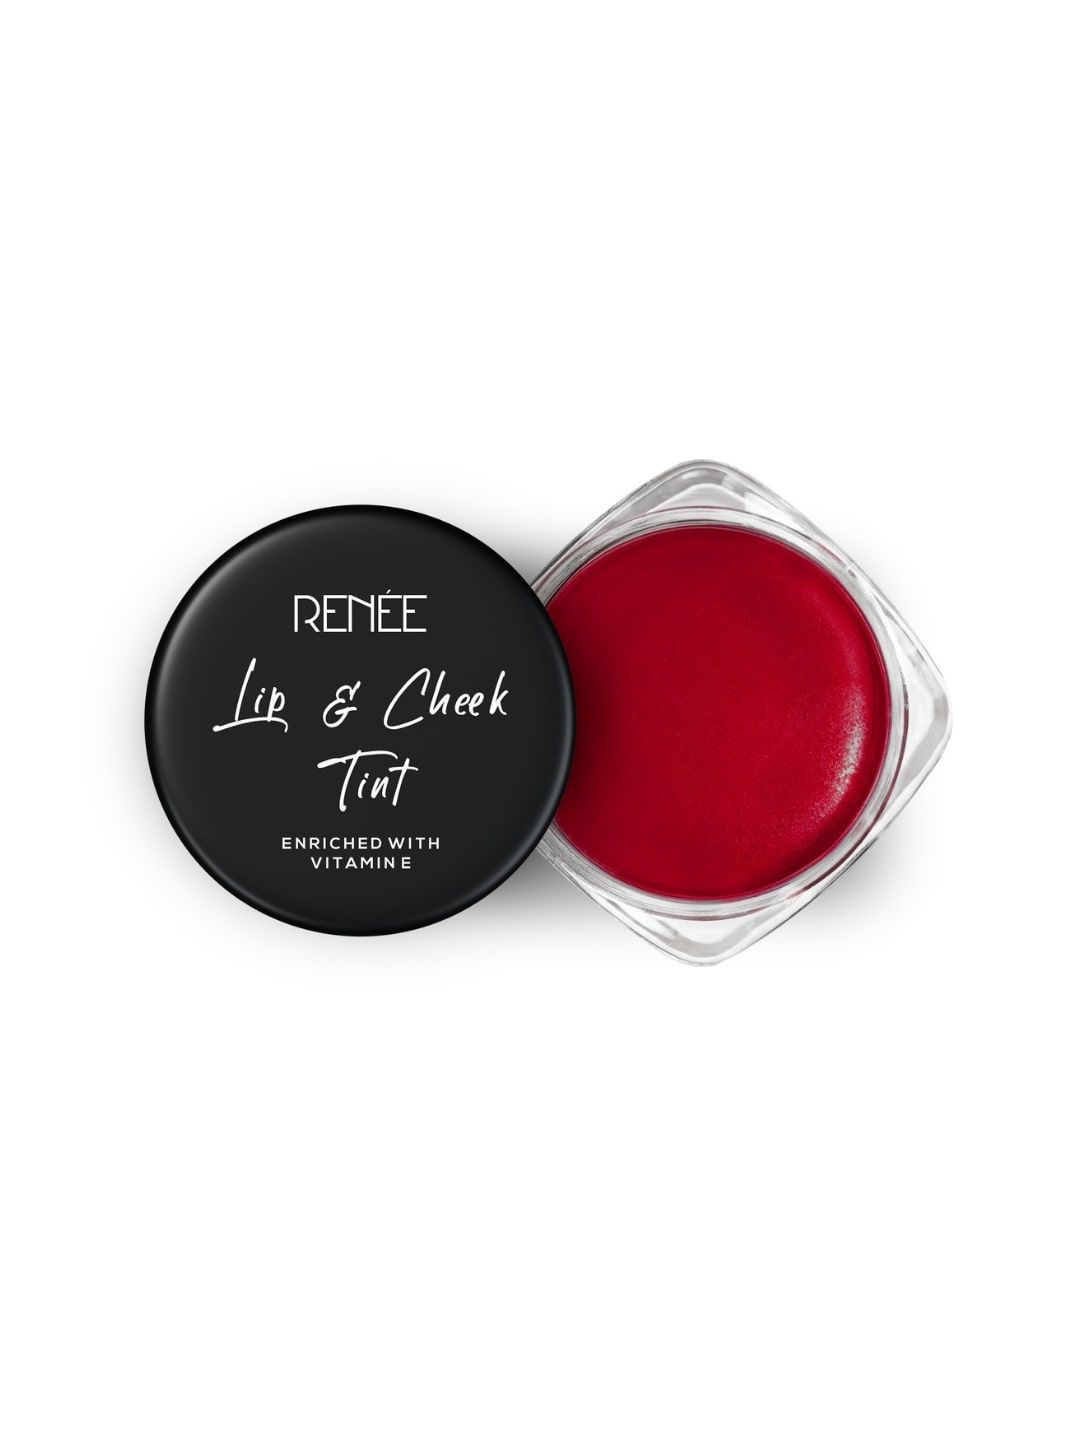 RENEE Lip & Cheek Tint - Rosebud 8g Price in India